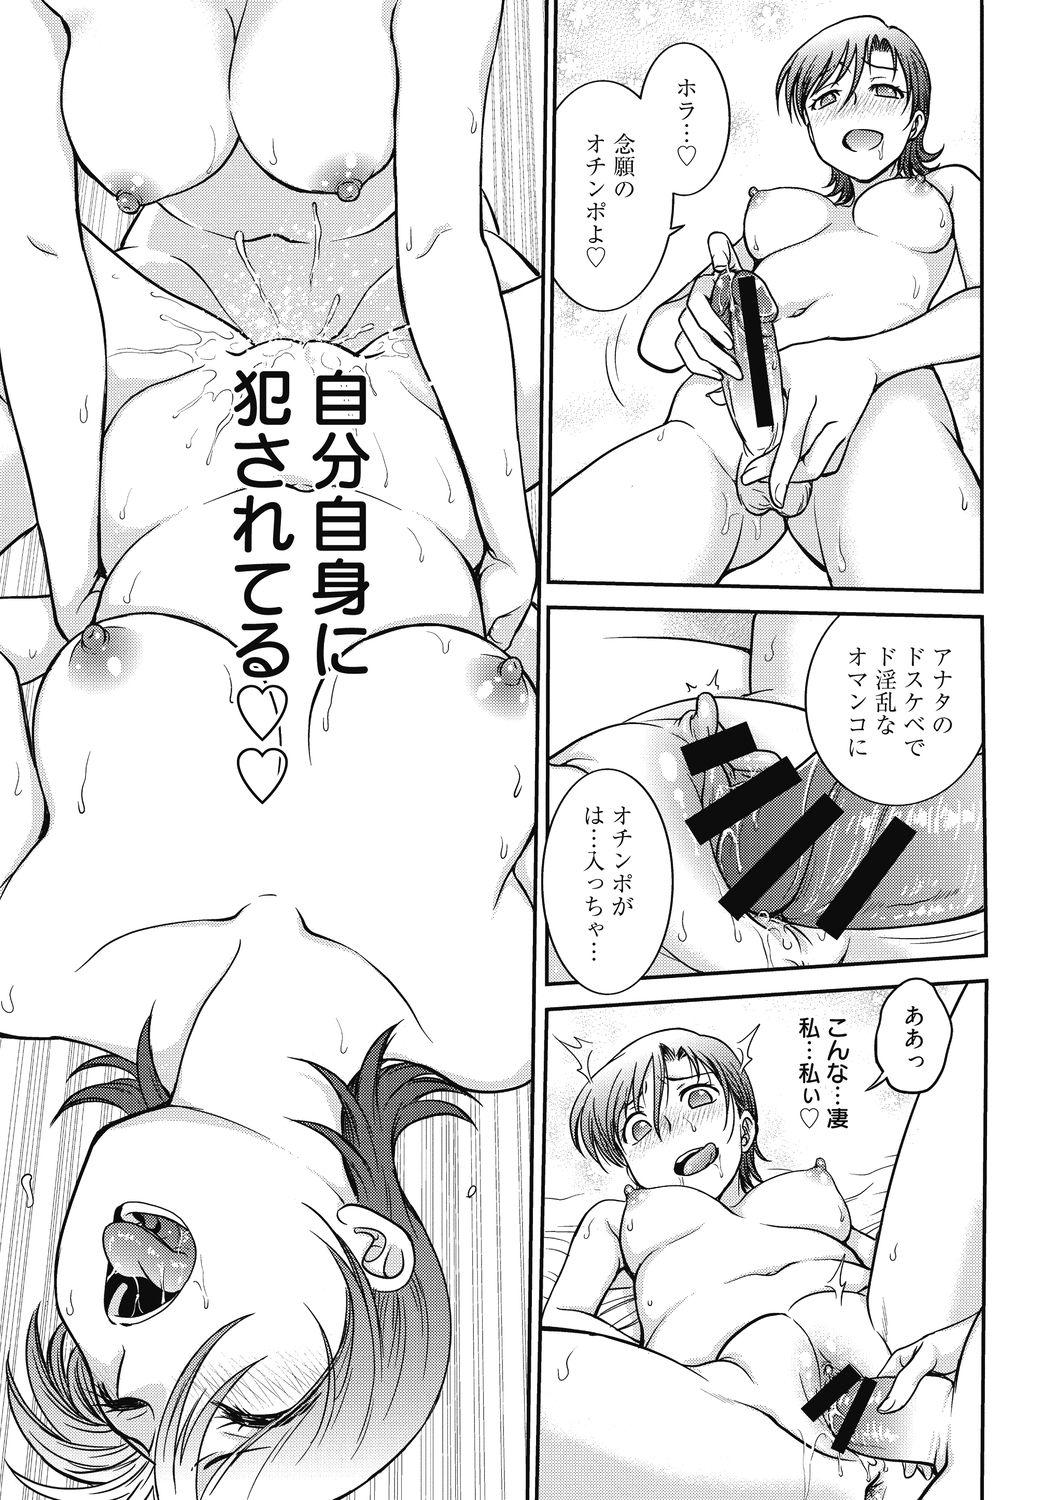 Kanojo no Shitagi o Nusundara... - I tried to steal her underwear... 160